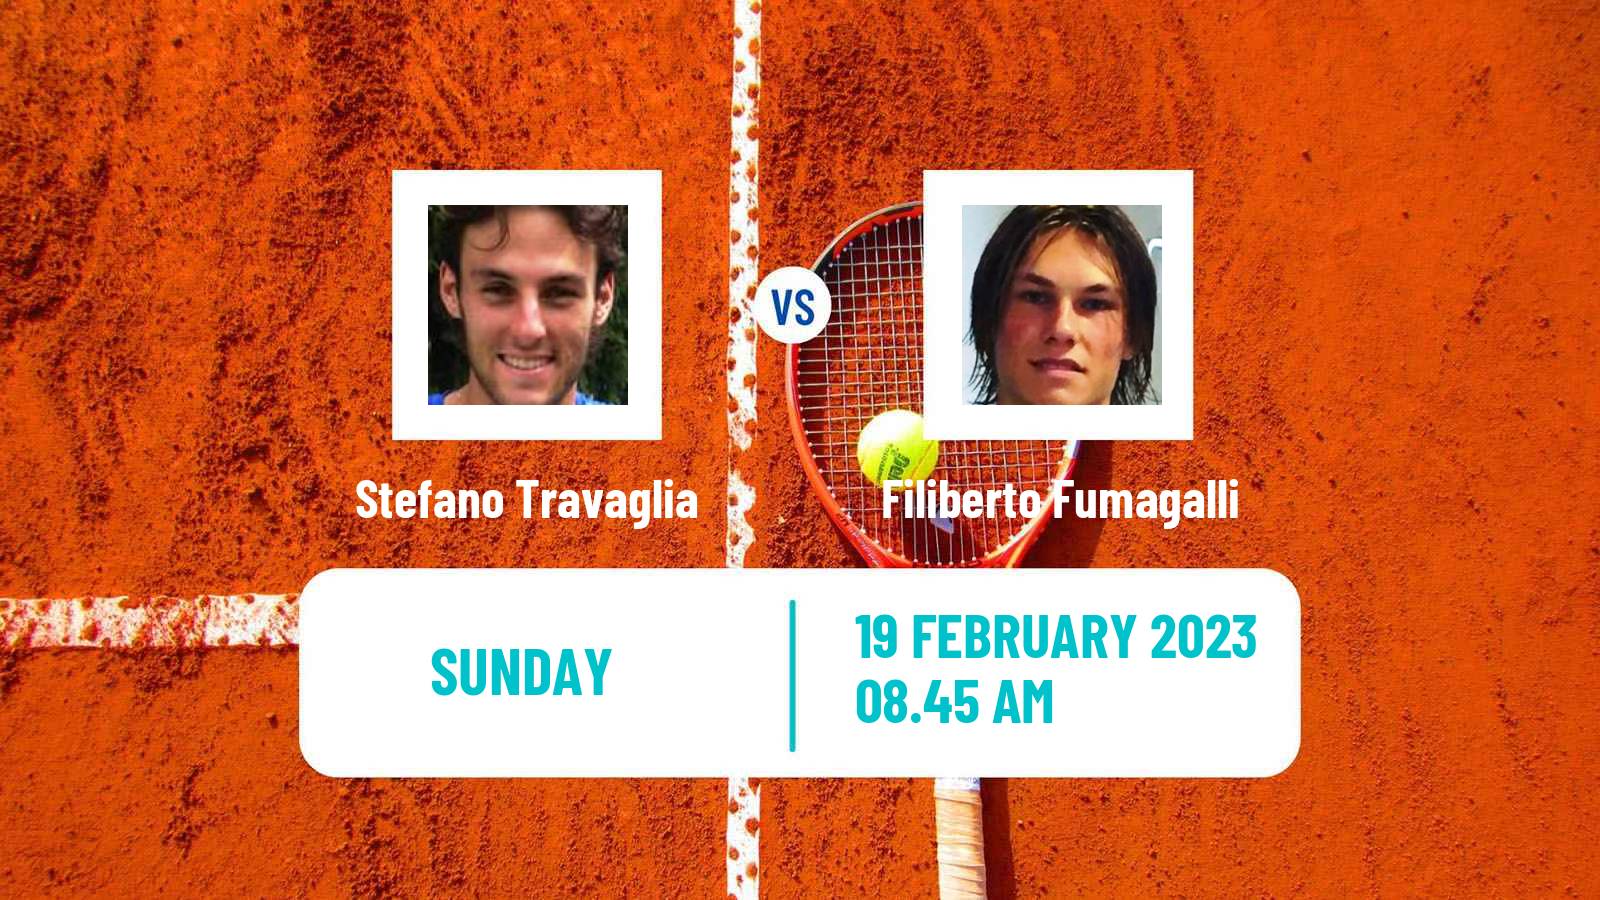 Tennis ATP Challenger Stefano Travaglia - Filiberto Fumagalli